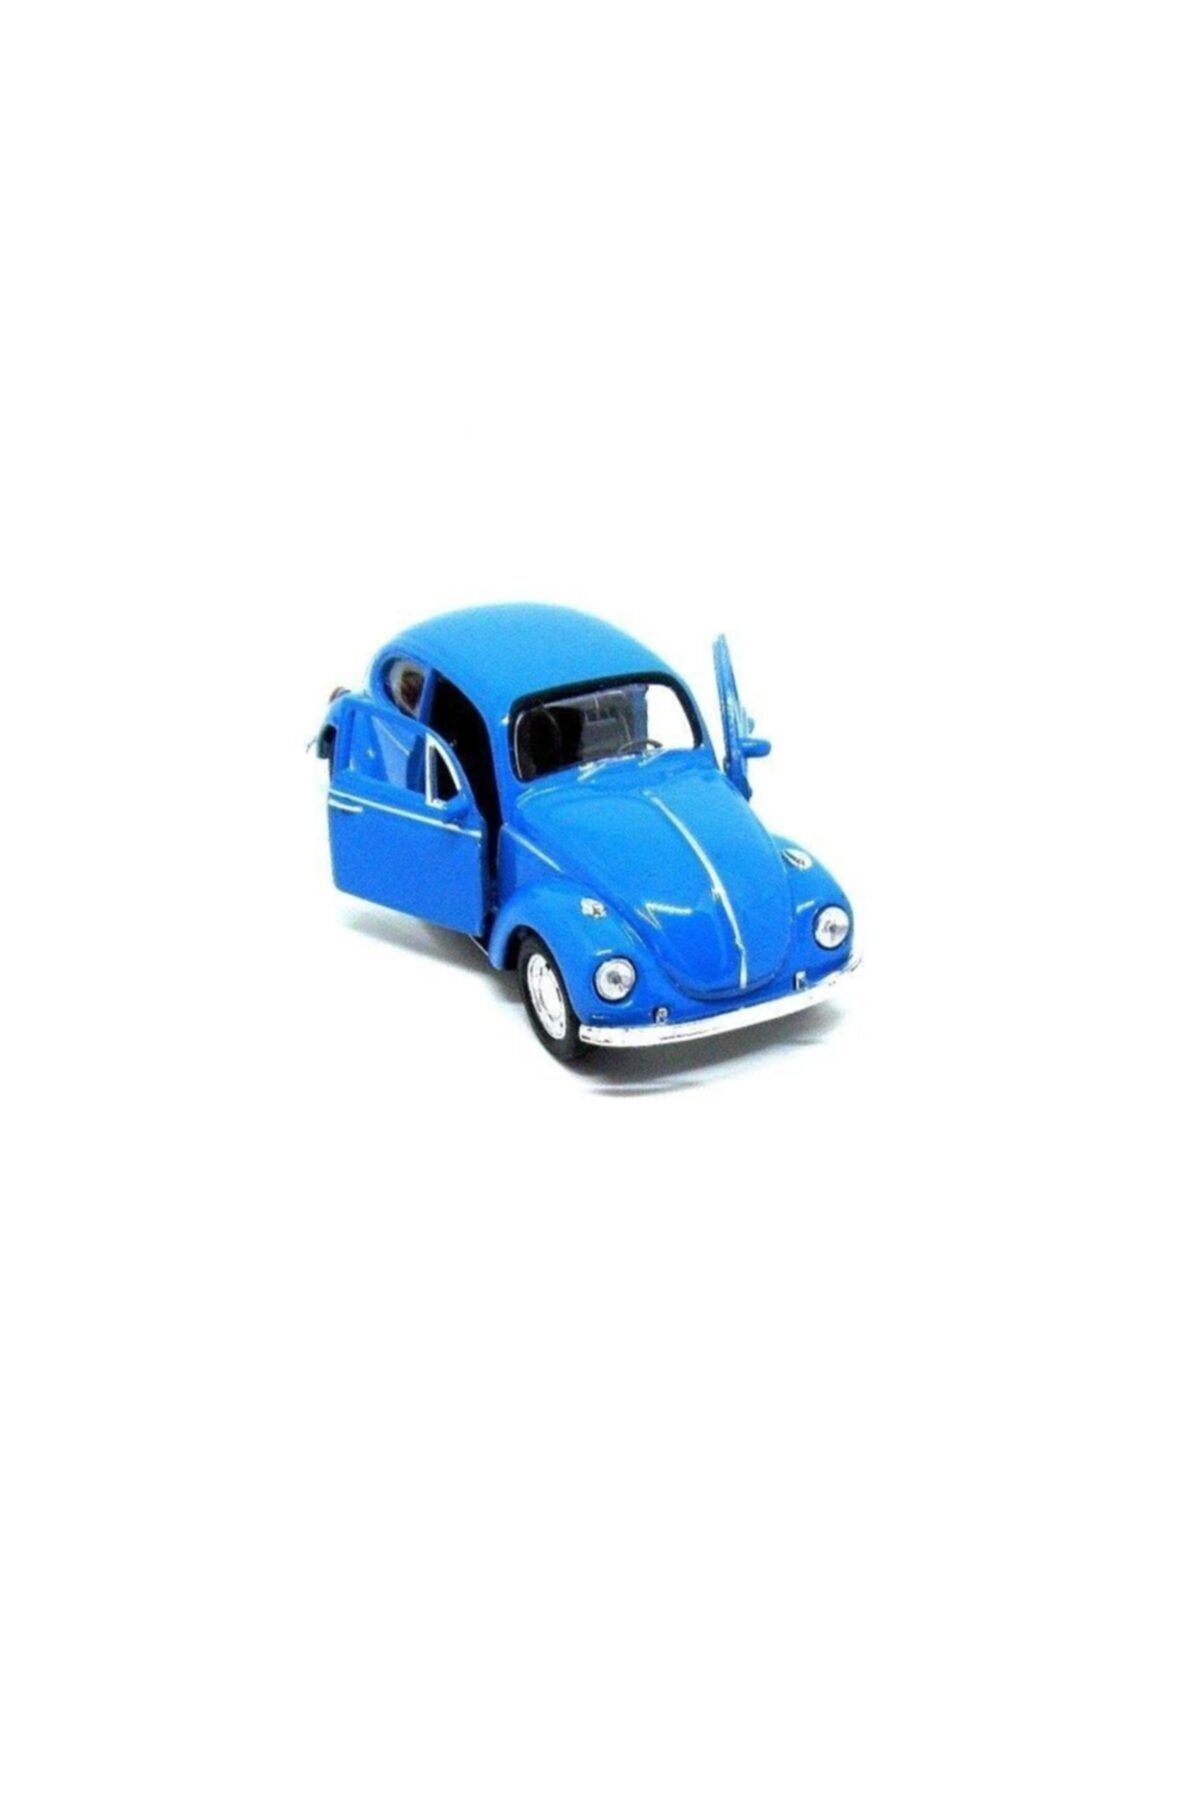 KARSAN Volkswagen Beetle - Metal Araba Koyu Mavi